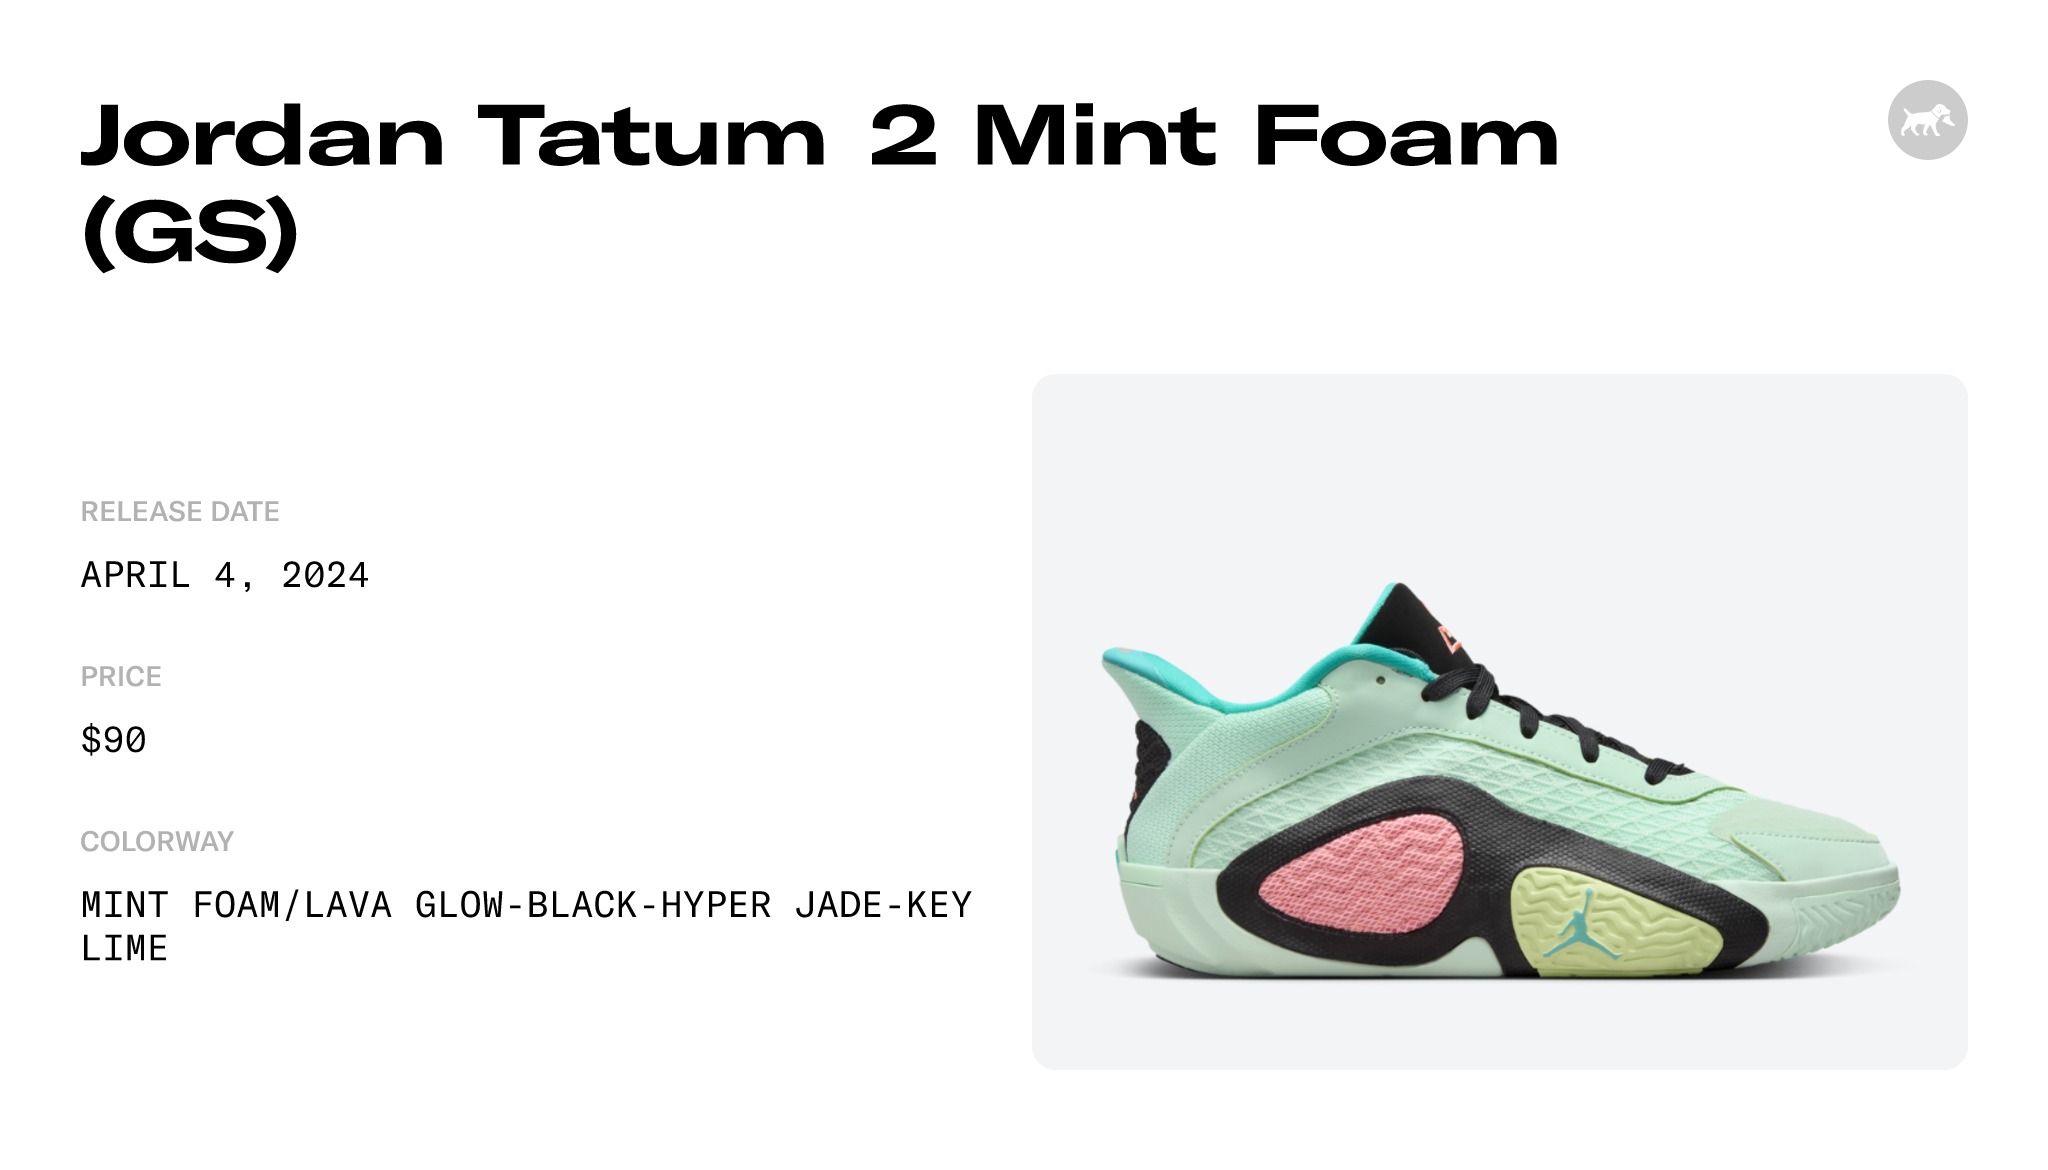 Jordan Tatum 2 Mint Foam (GS) - FJ6459-300 Raffles and Release Date